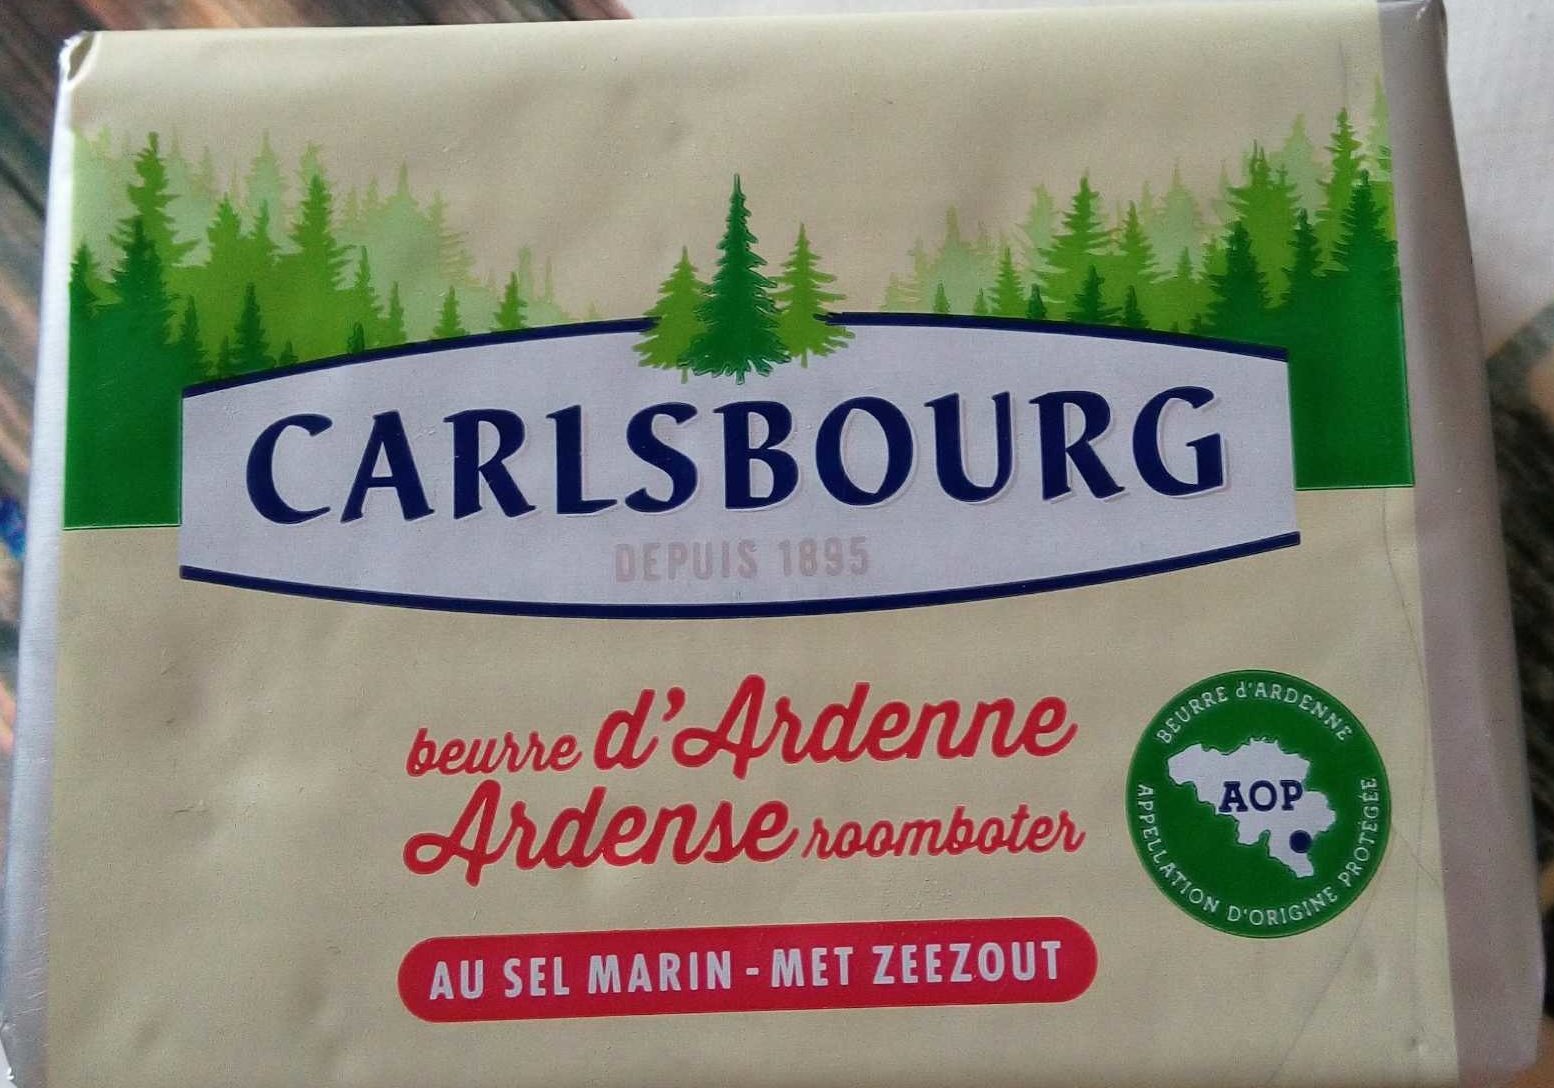 Beurre d'Ardenne - au sel marin - Product - fr